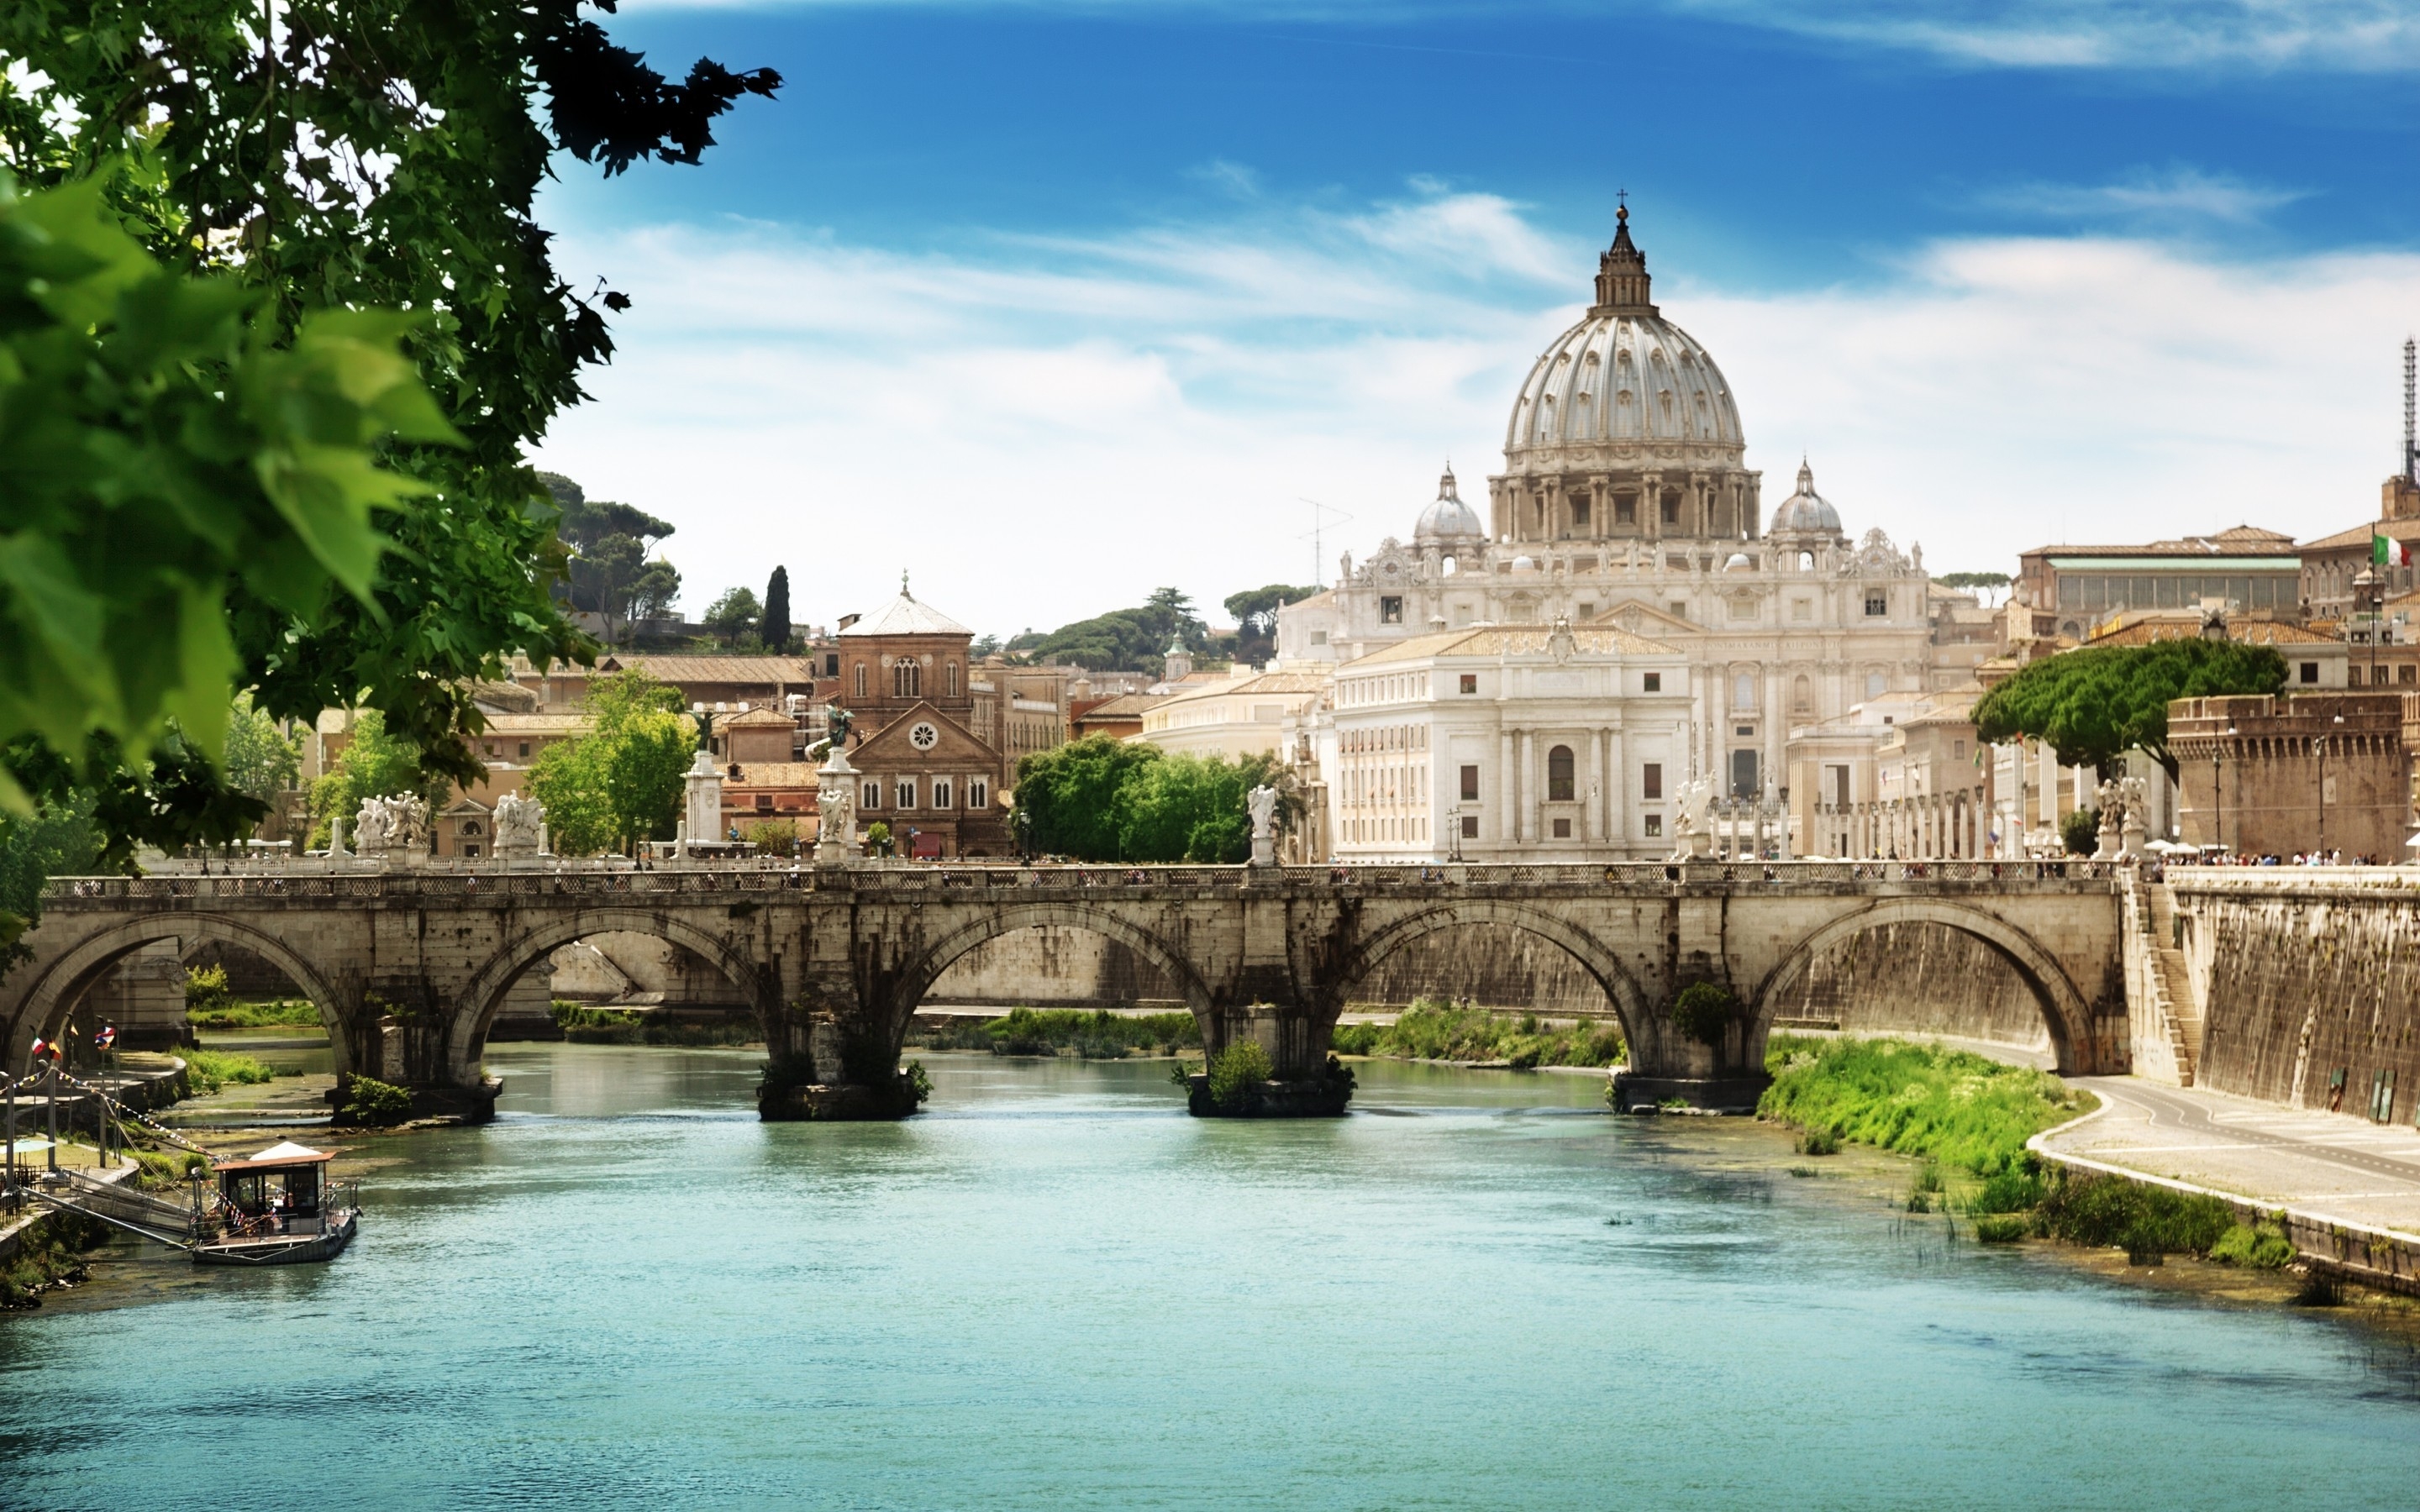 St Angelo Bridge Rome for 2880 x 1800 Retina Display resolution